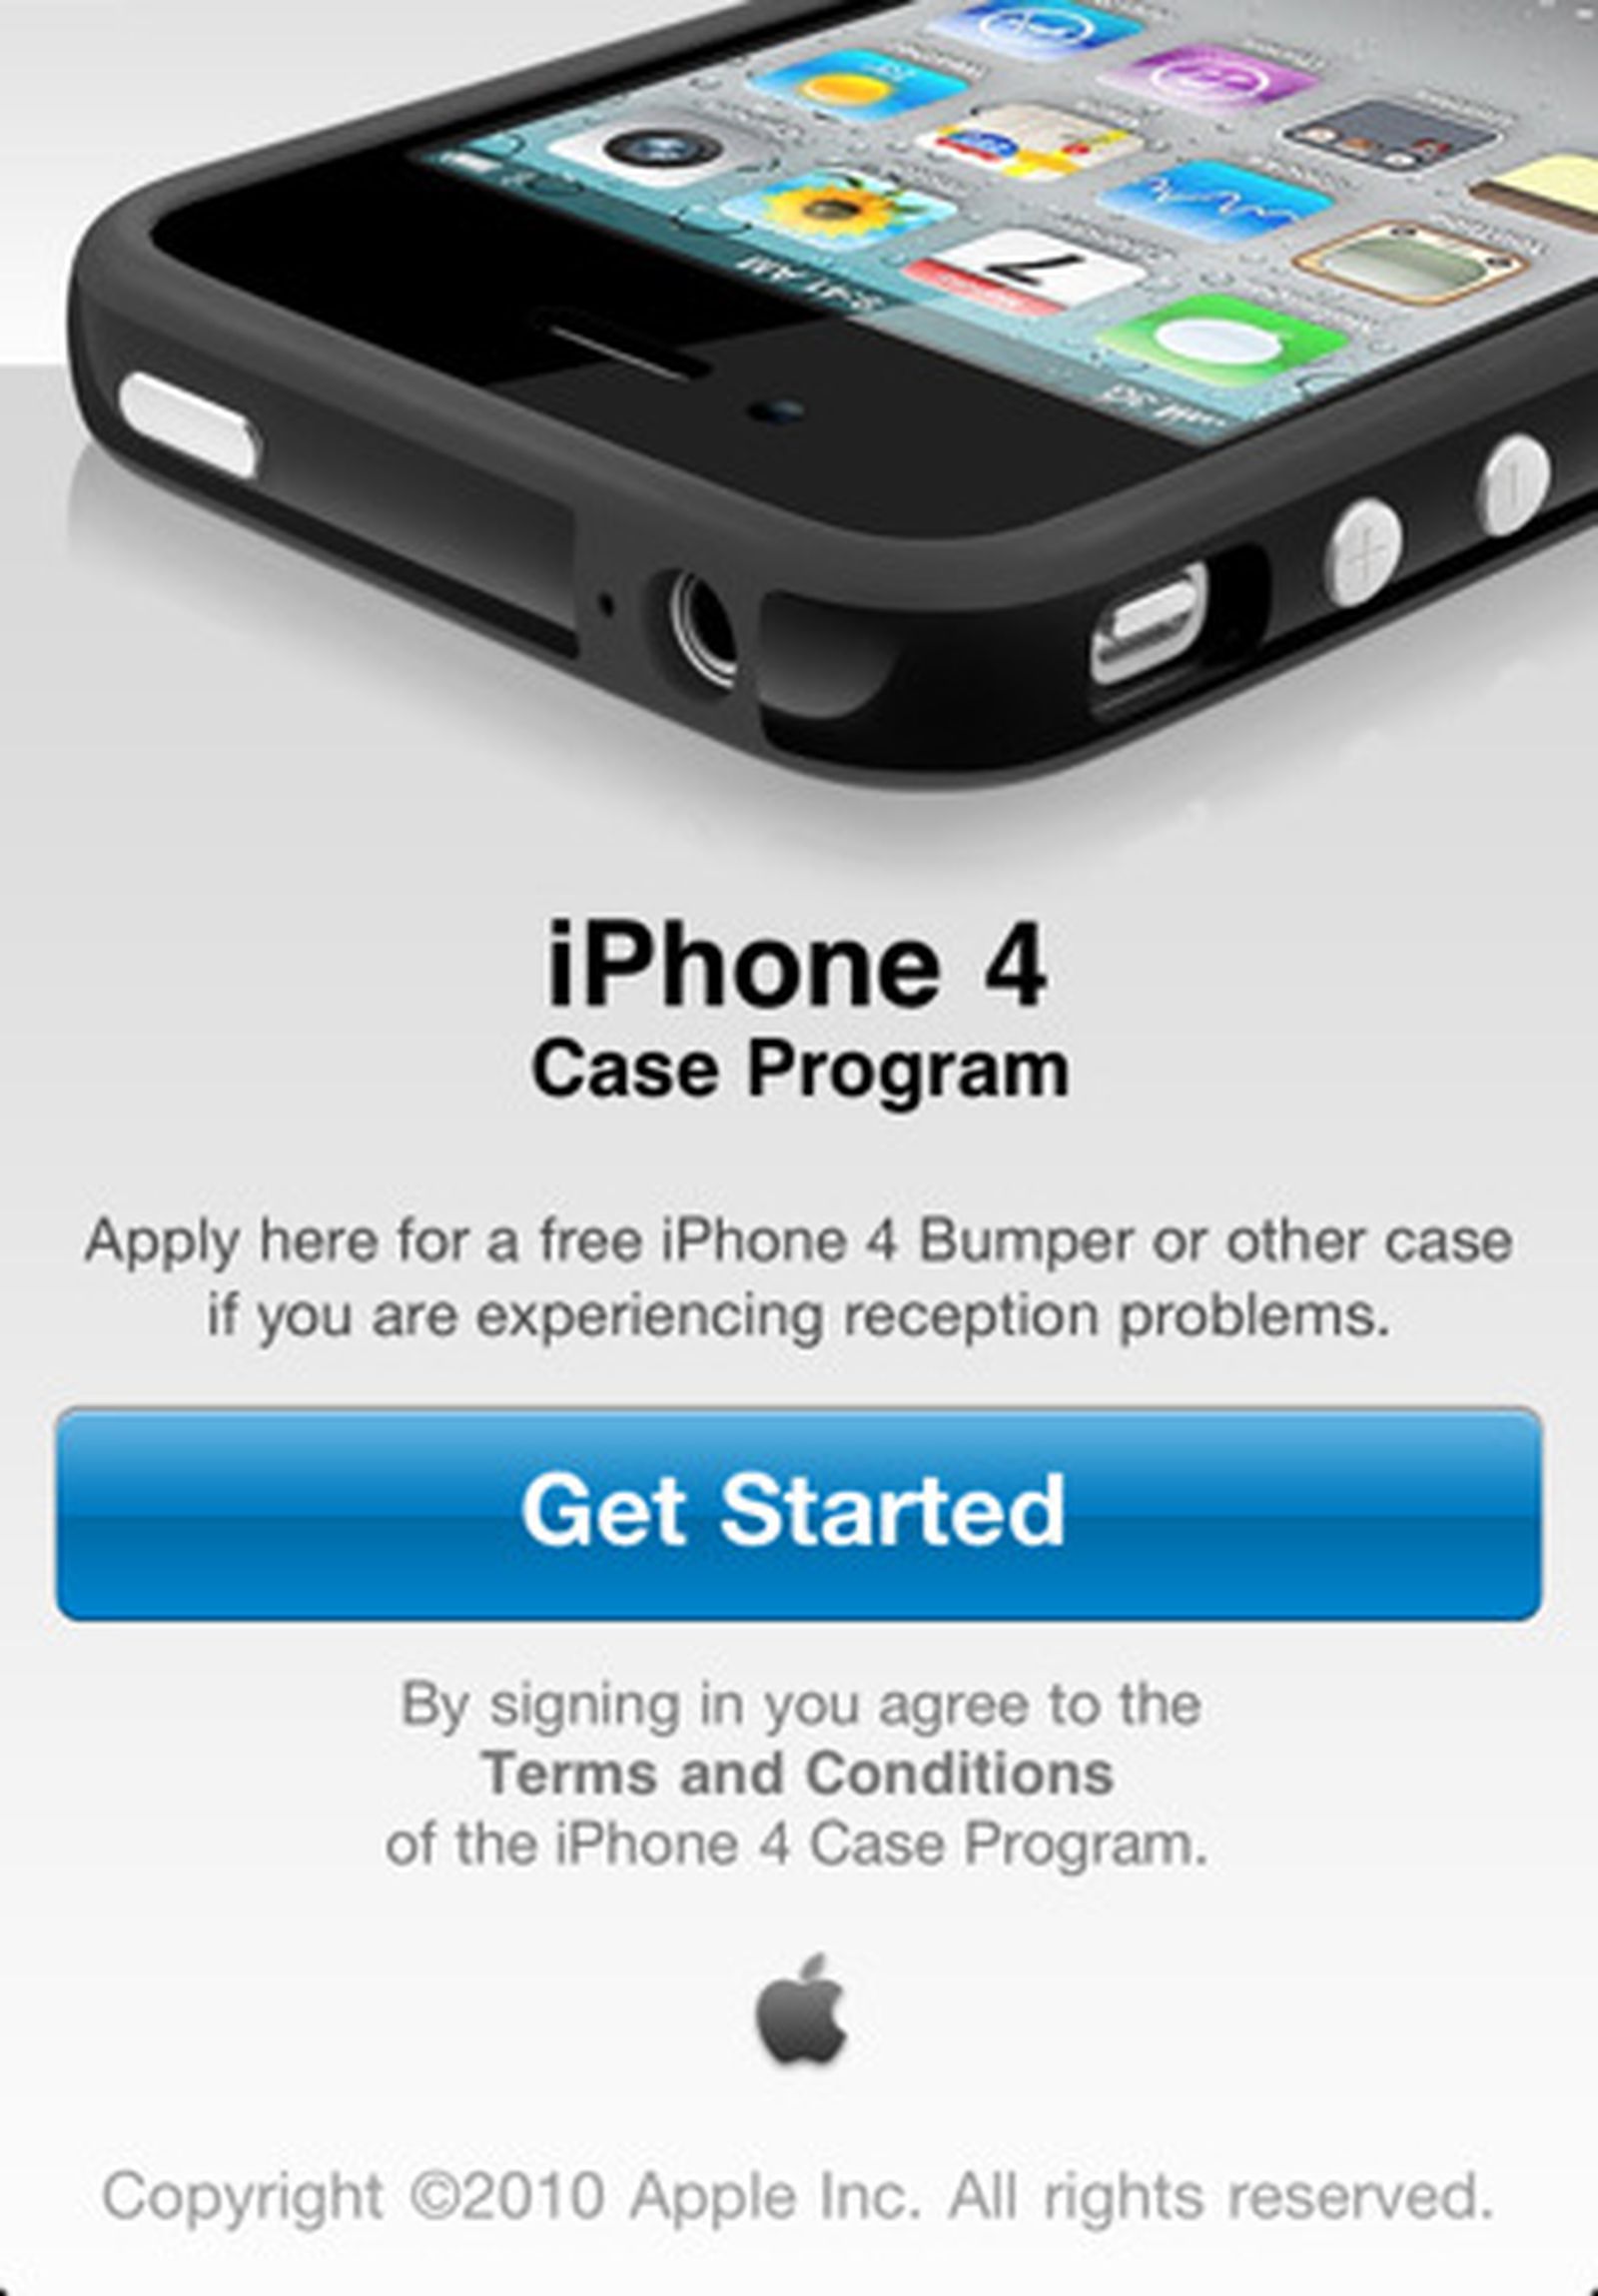 huiswerk nikkel documentaire Apple Launches Free iPhone 4 Case Program - MacRumors